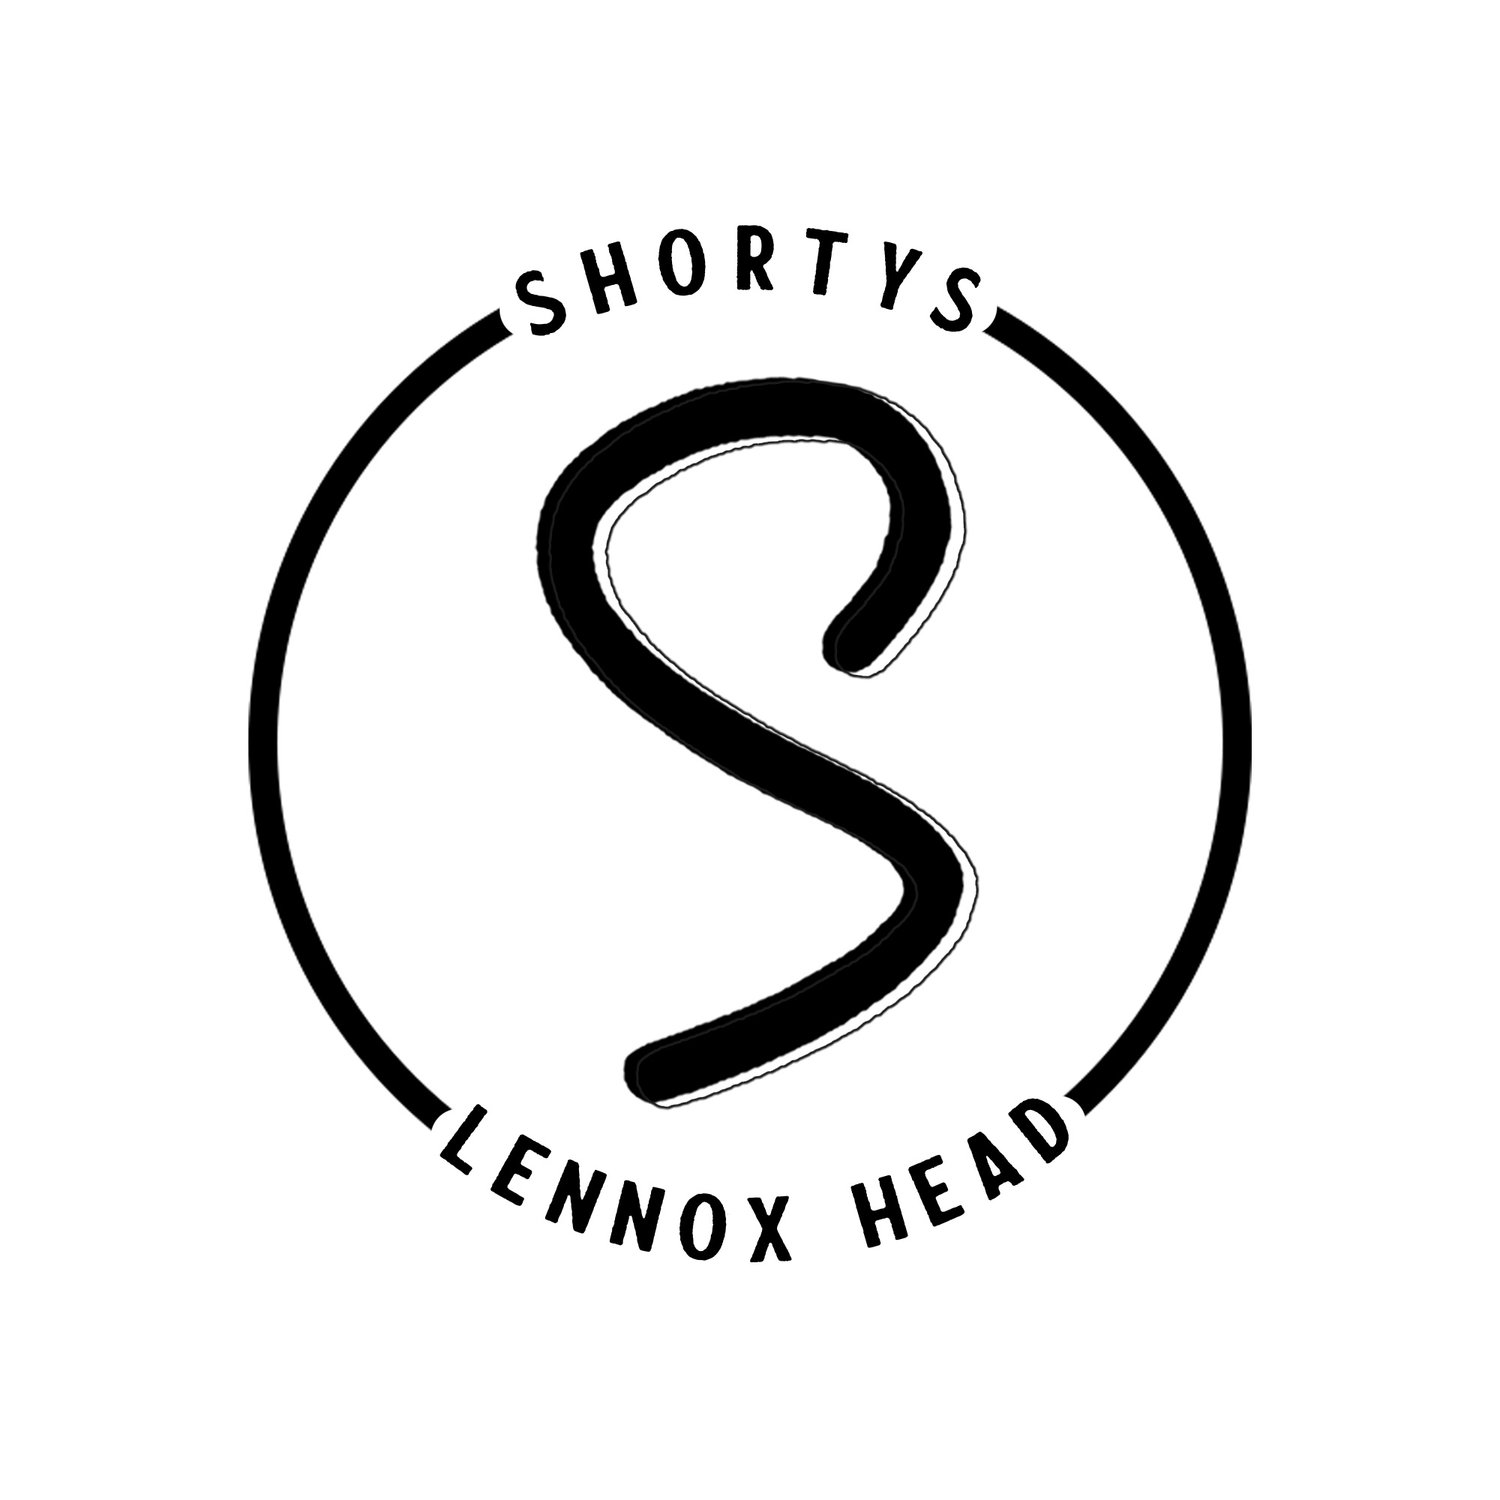 Shortys Lennox Head